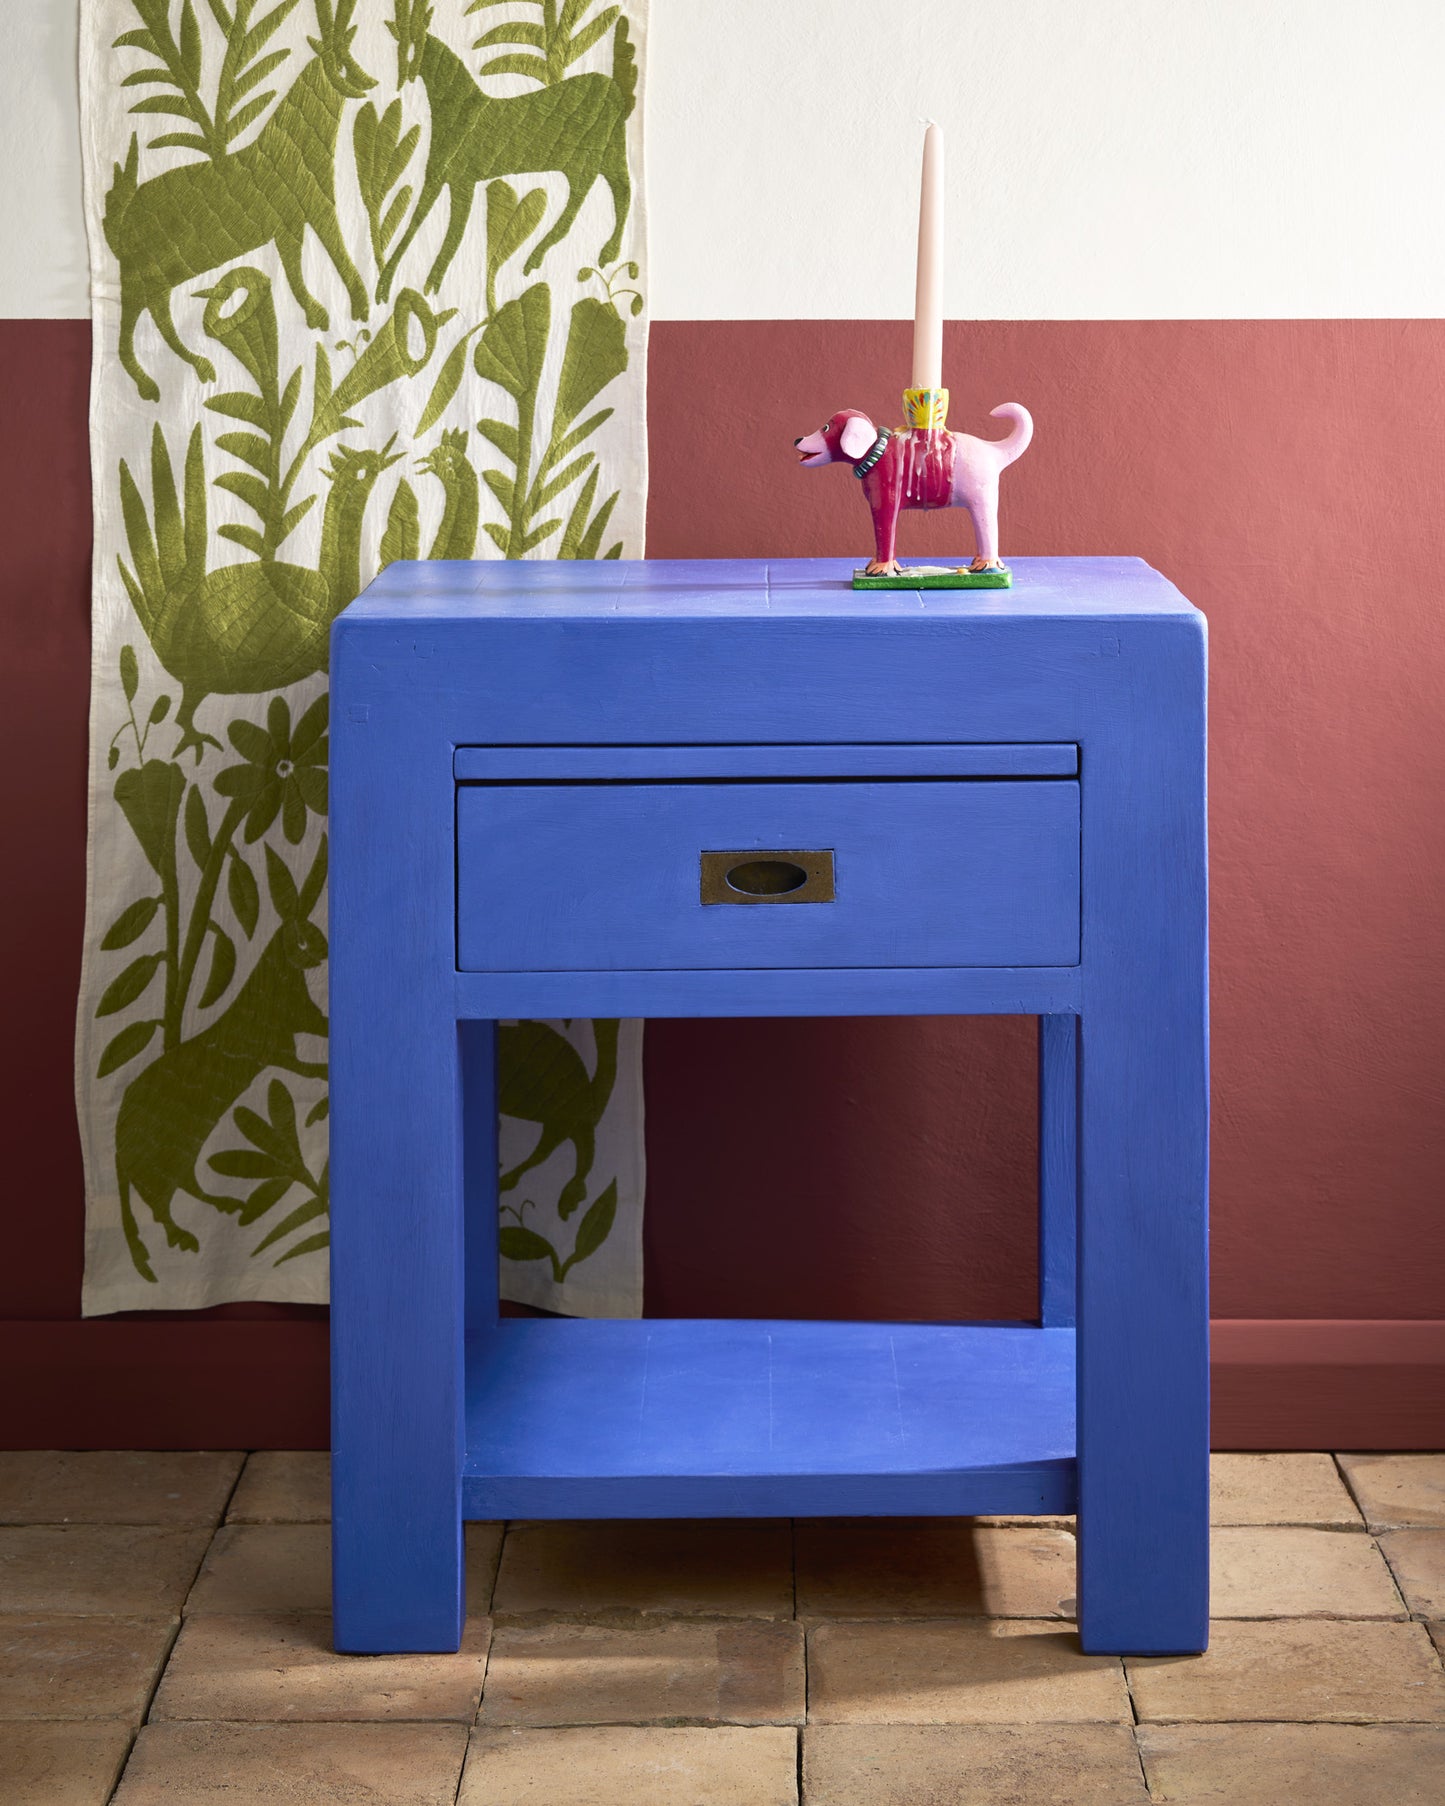 Annie Sloan Chalk Paint® FRIDA BLUE